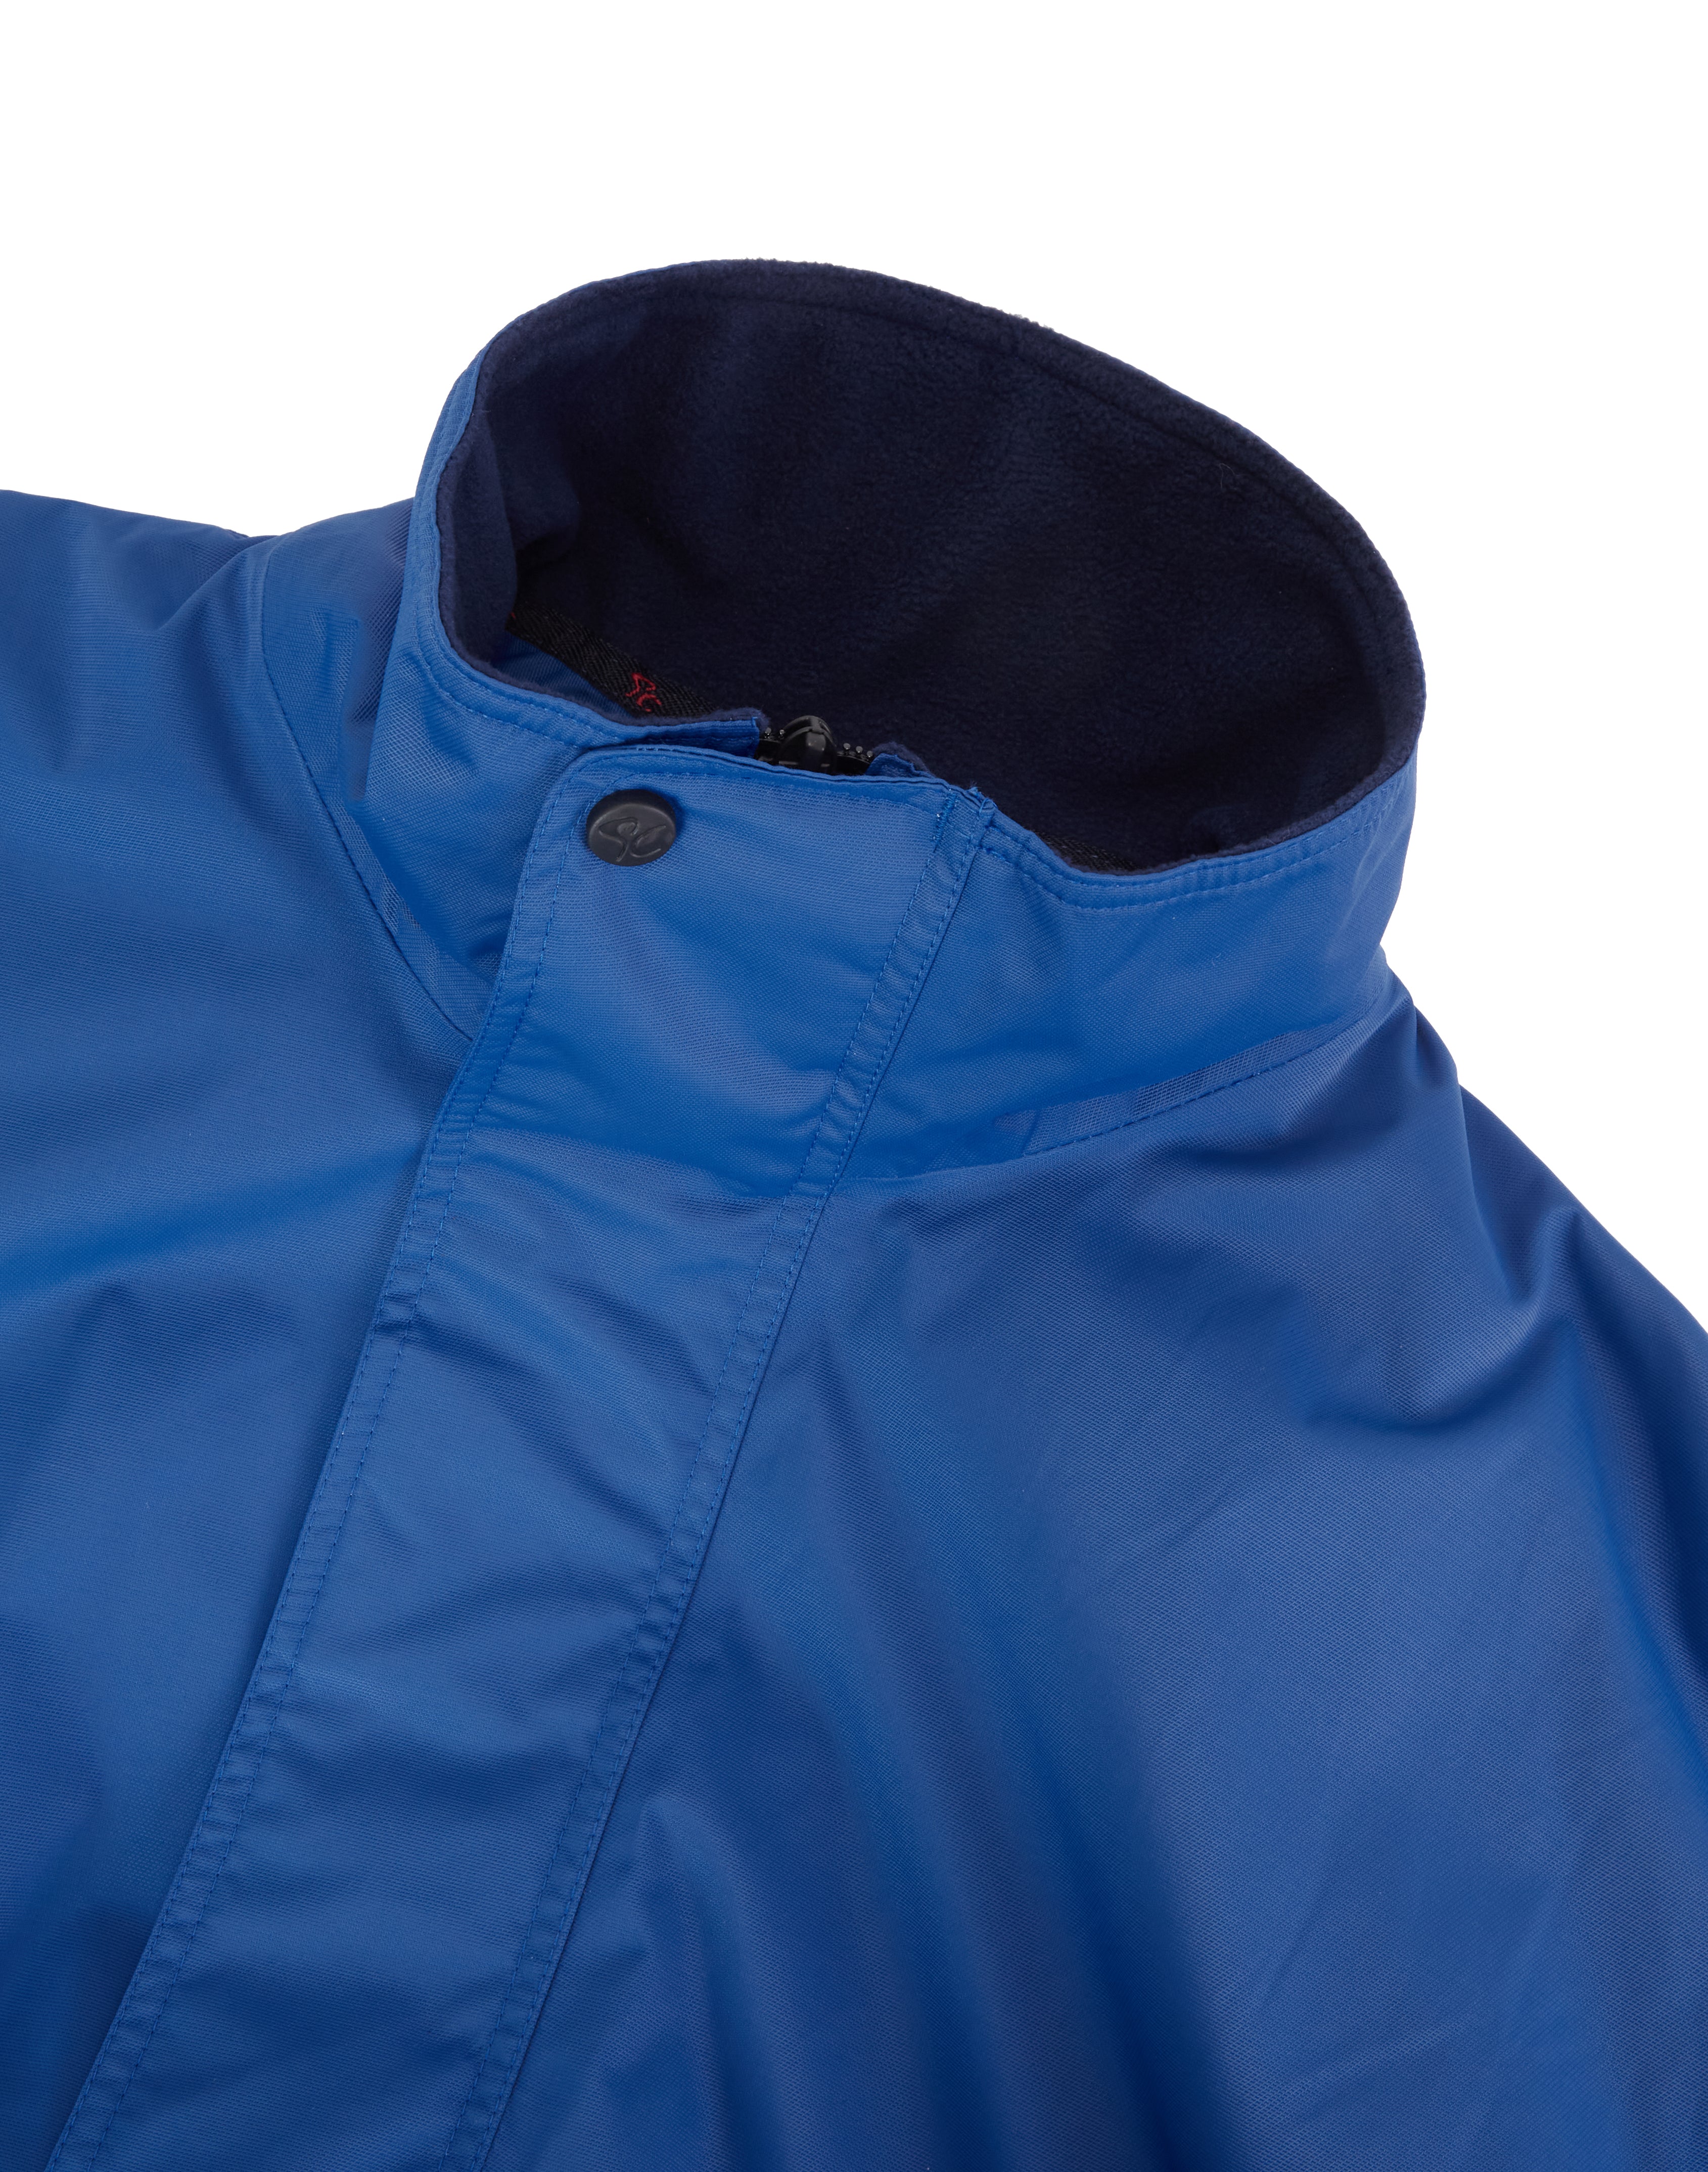 PC Jacket - The Original - Royal Blue | PCRacewear